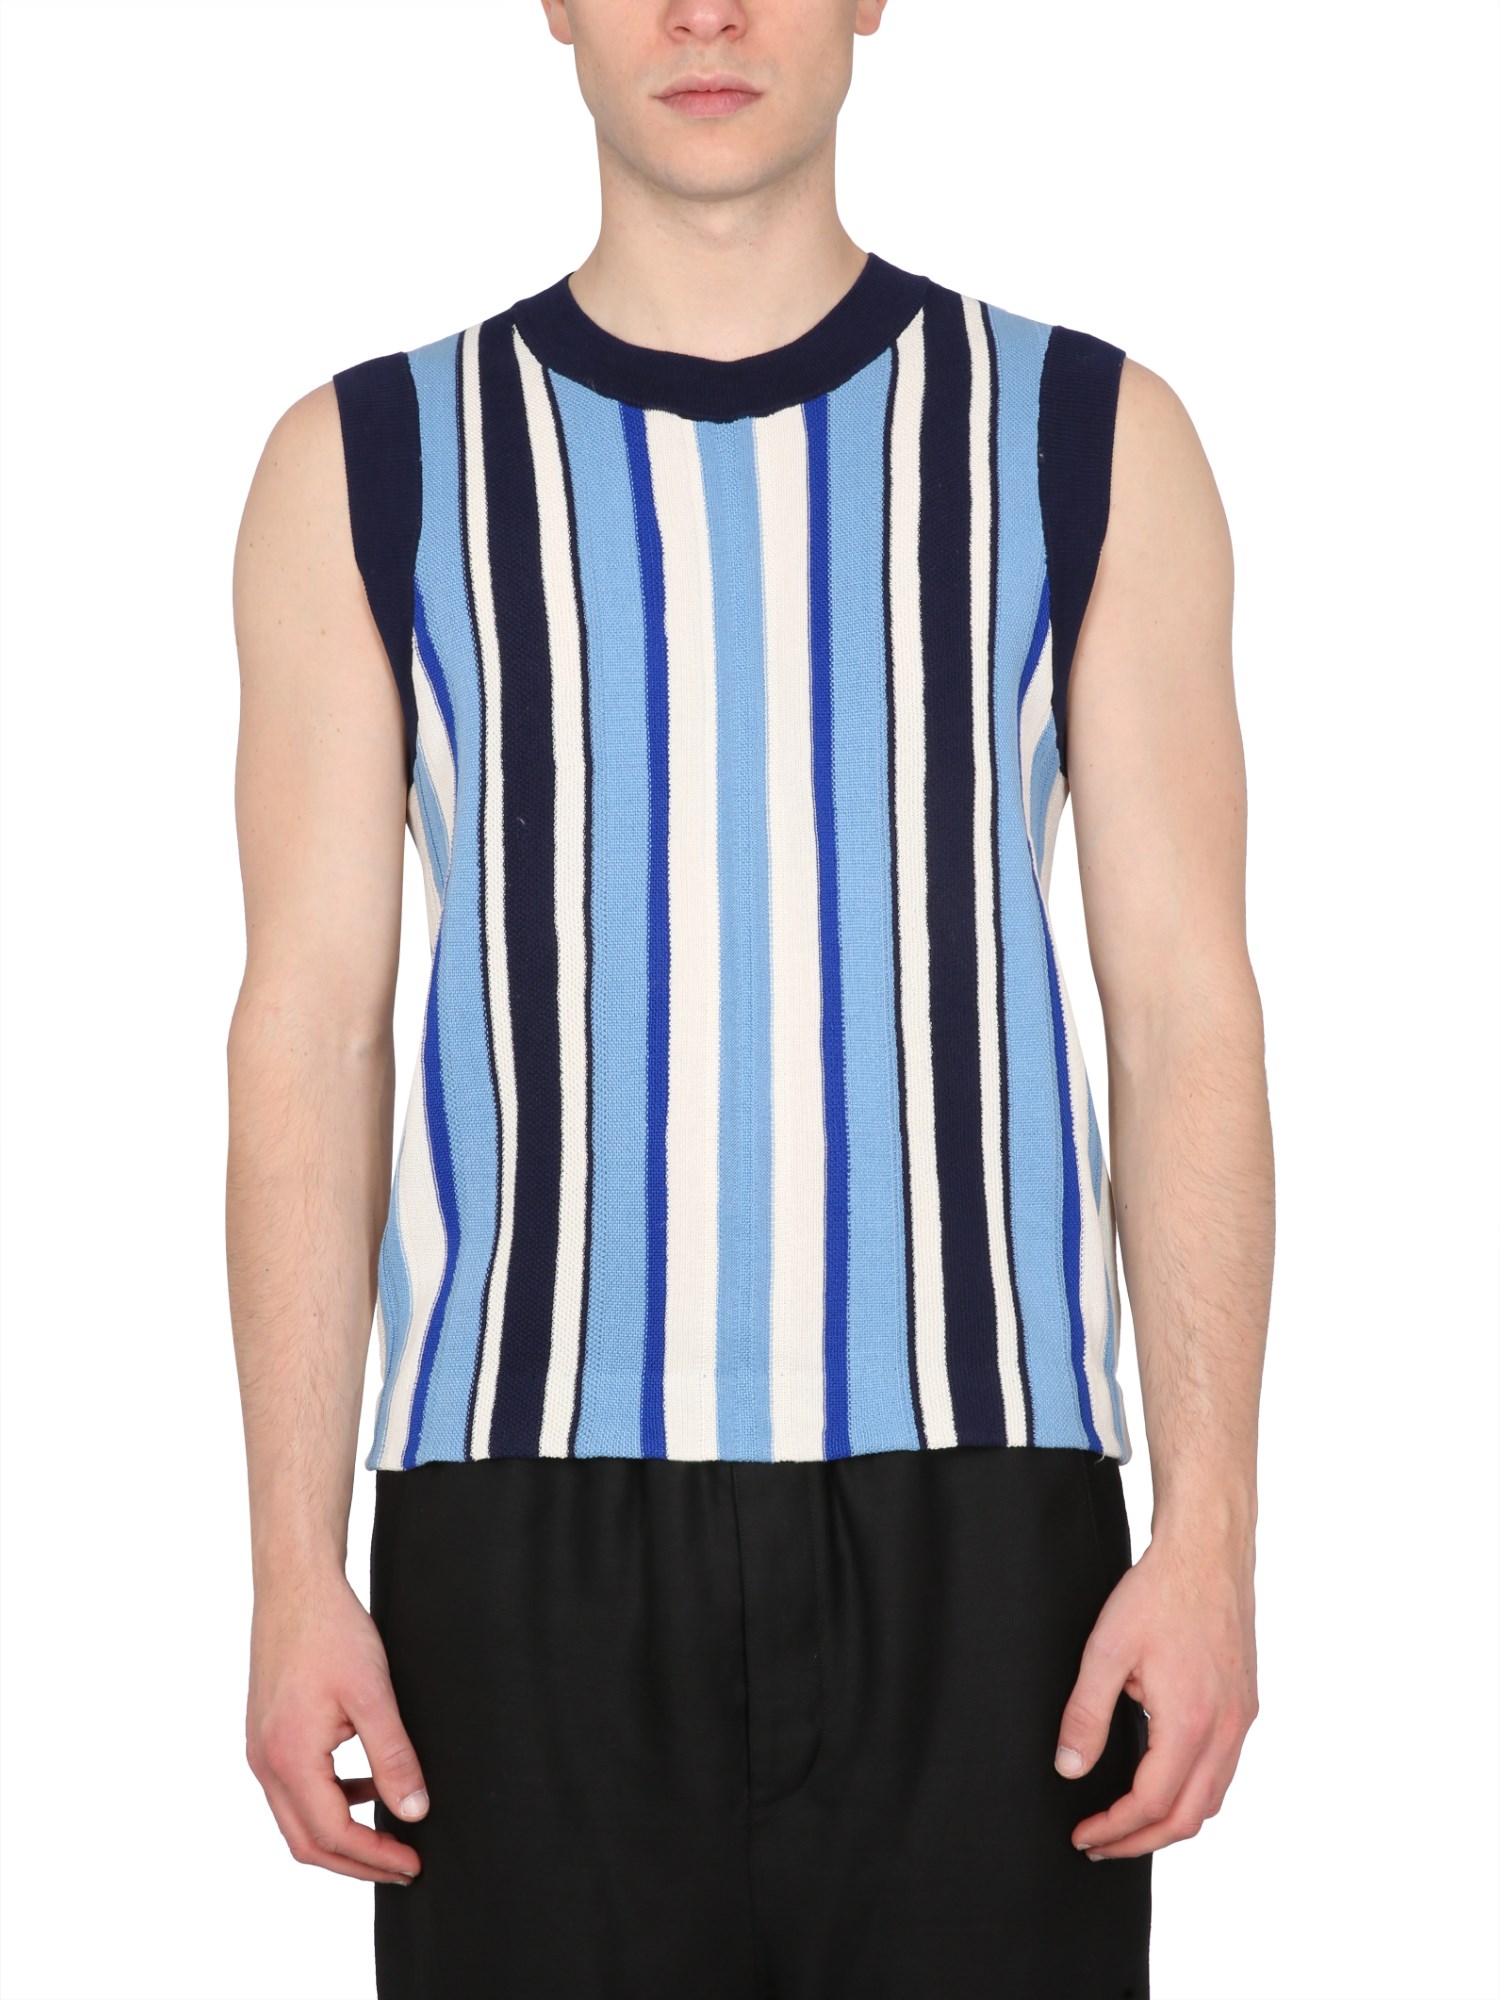 wales bonner vest with stripe pattern